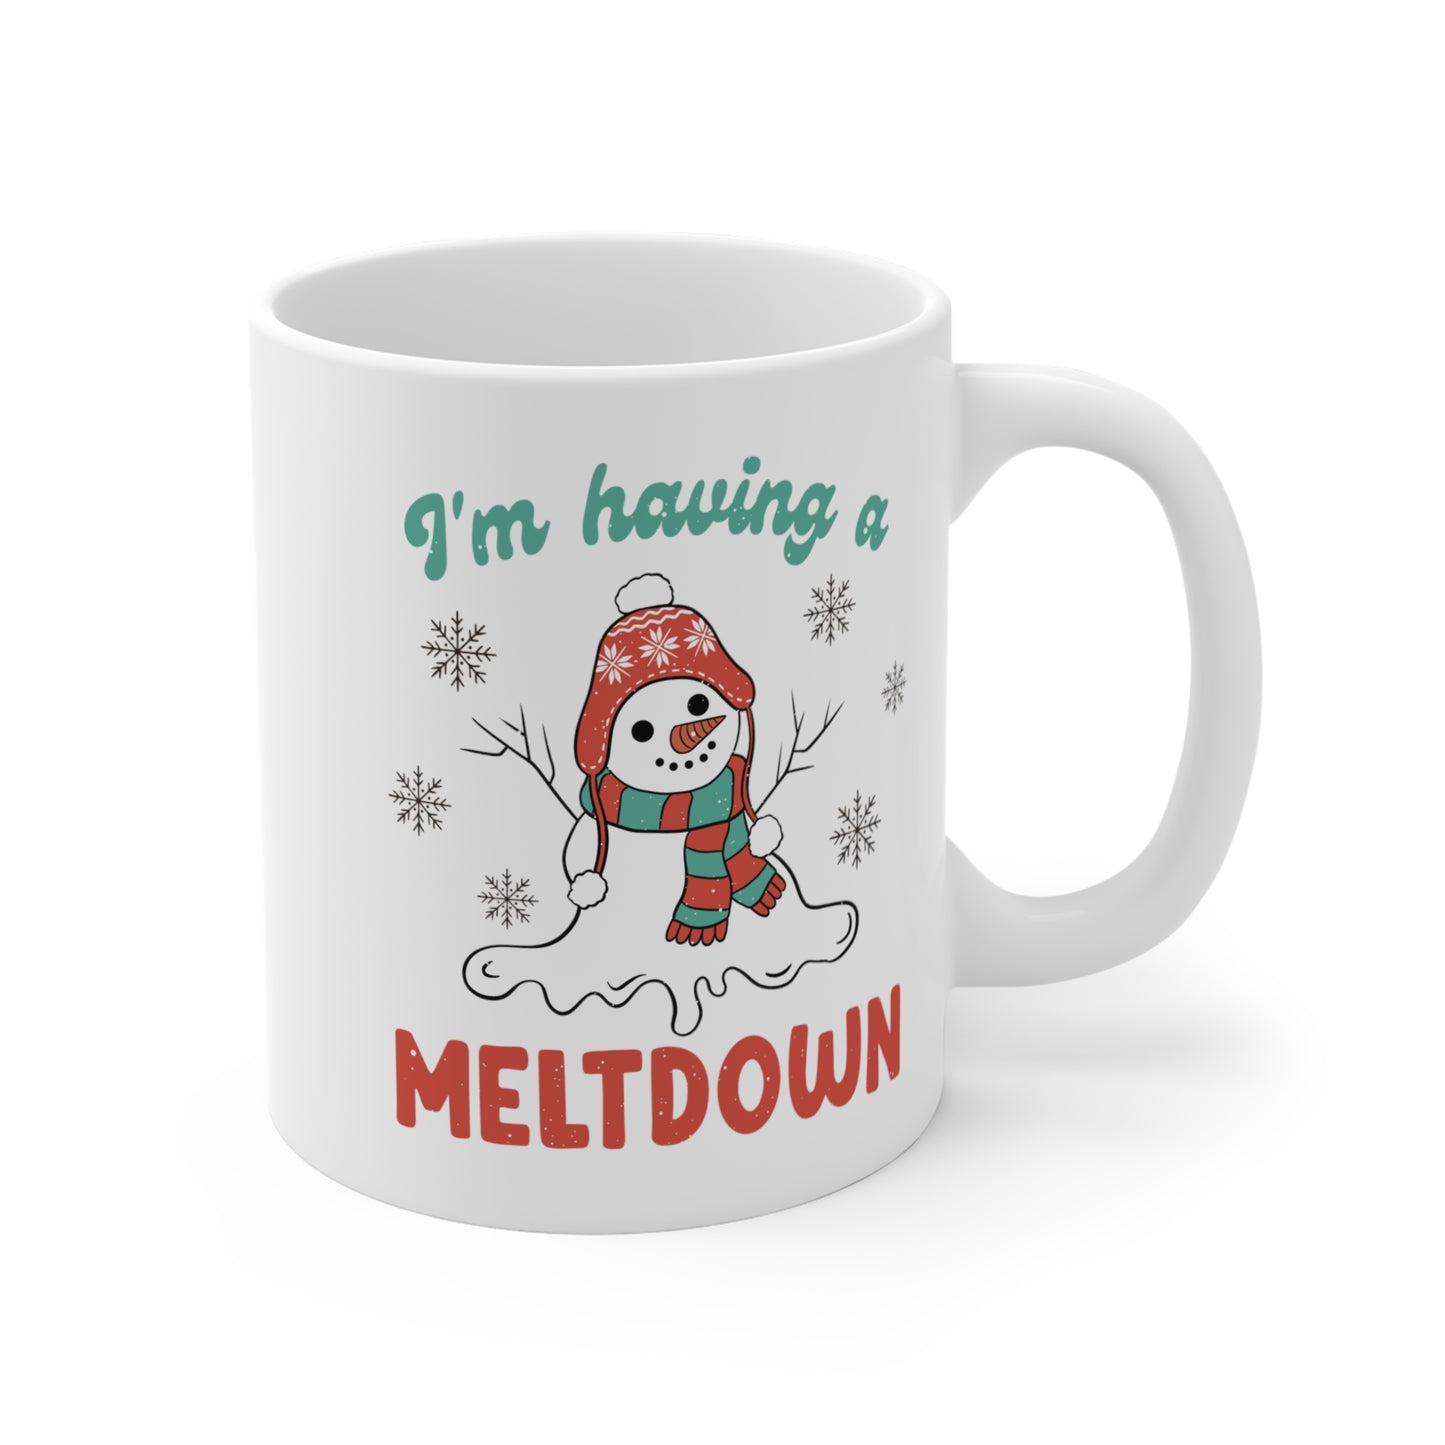 I'm Having a Meltdown - Christmas Mug